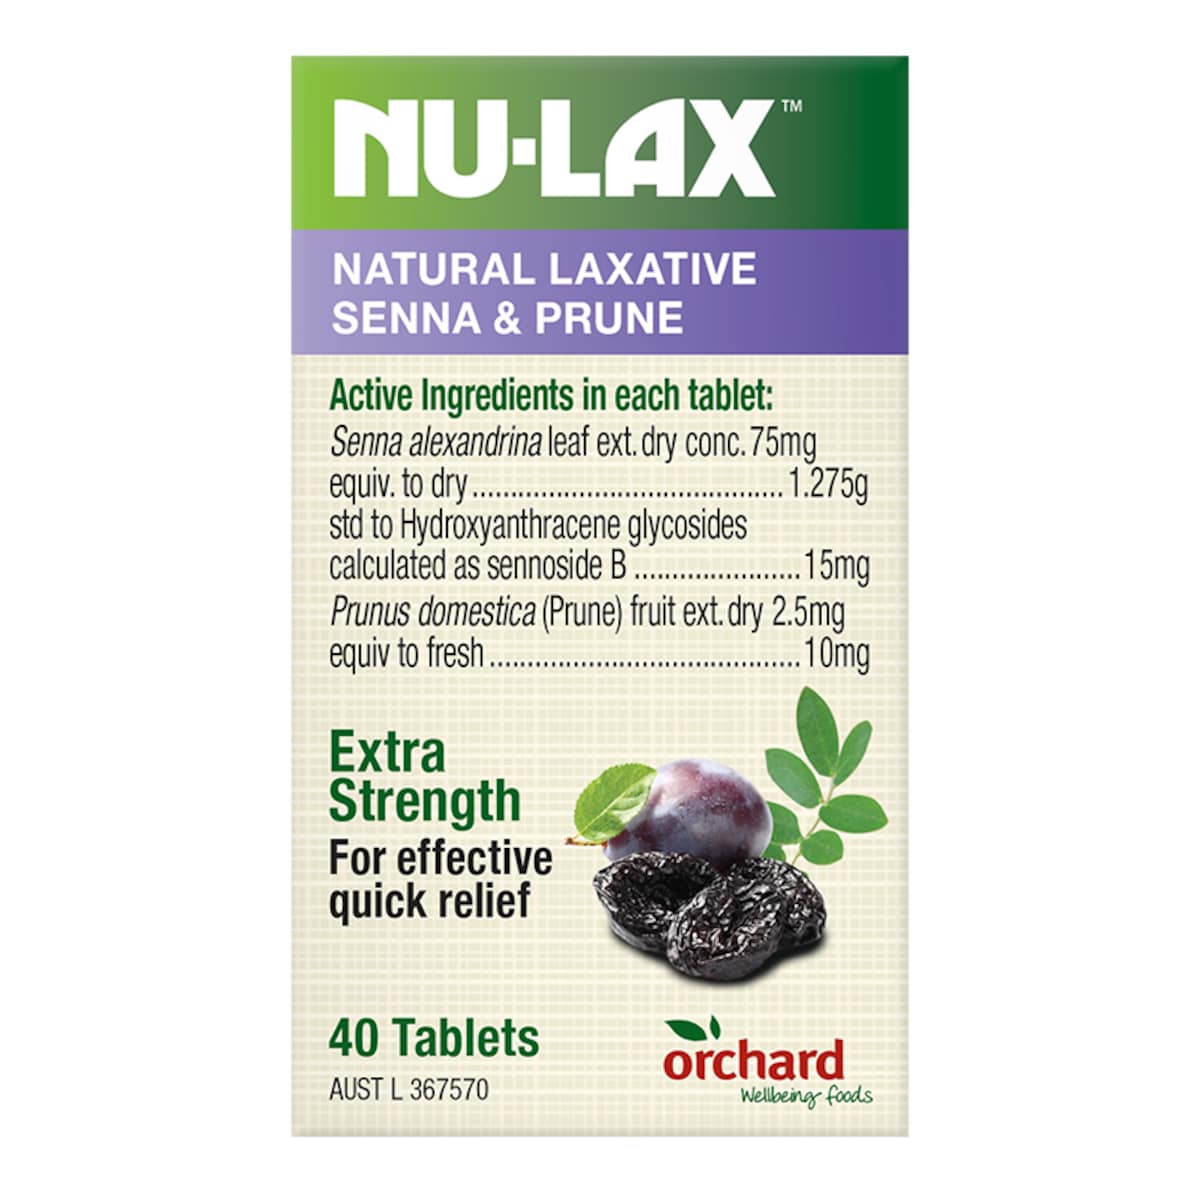 Nu-Lax Natural Laxative Senna & Prune 40 Tablets